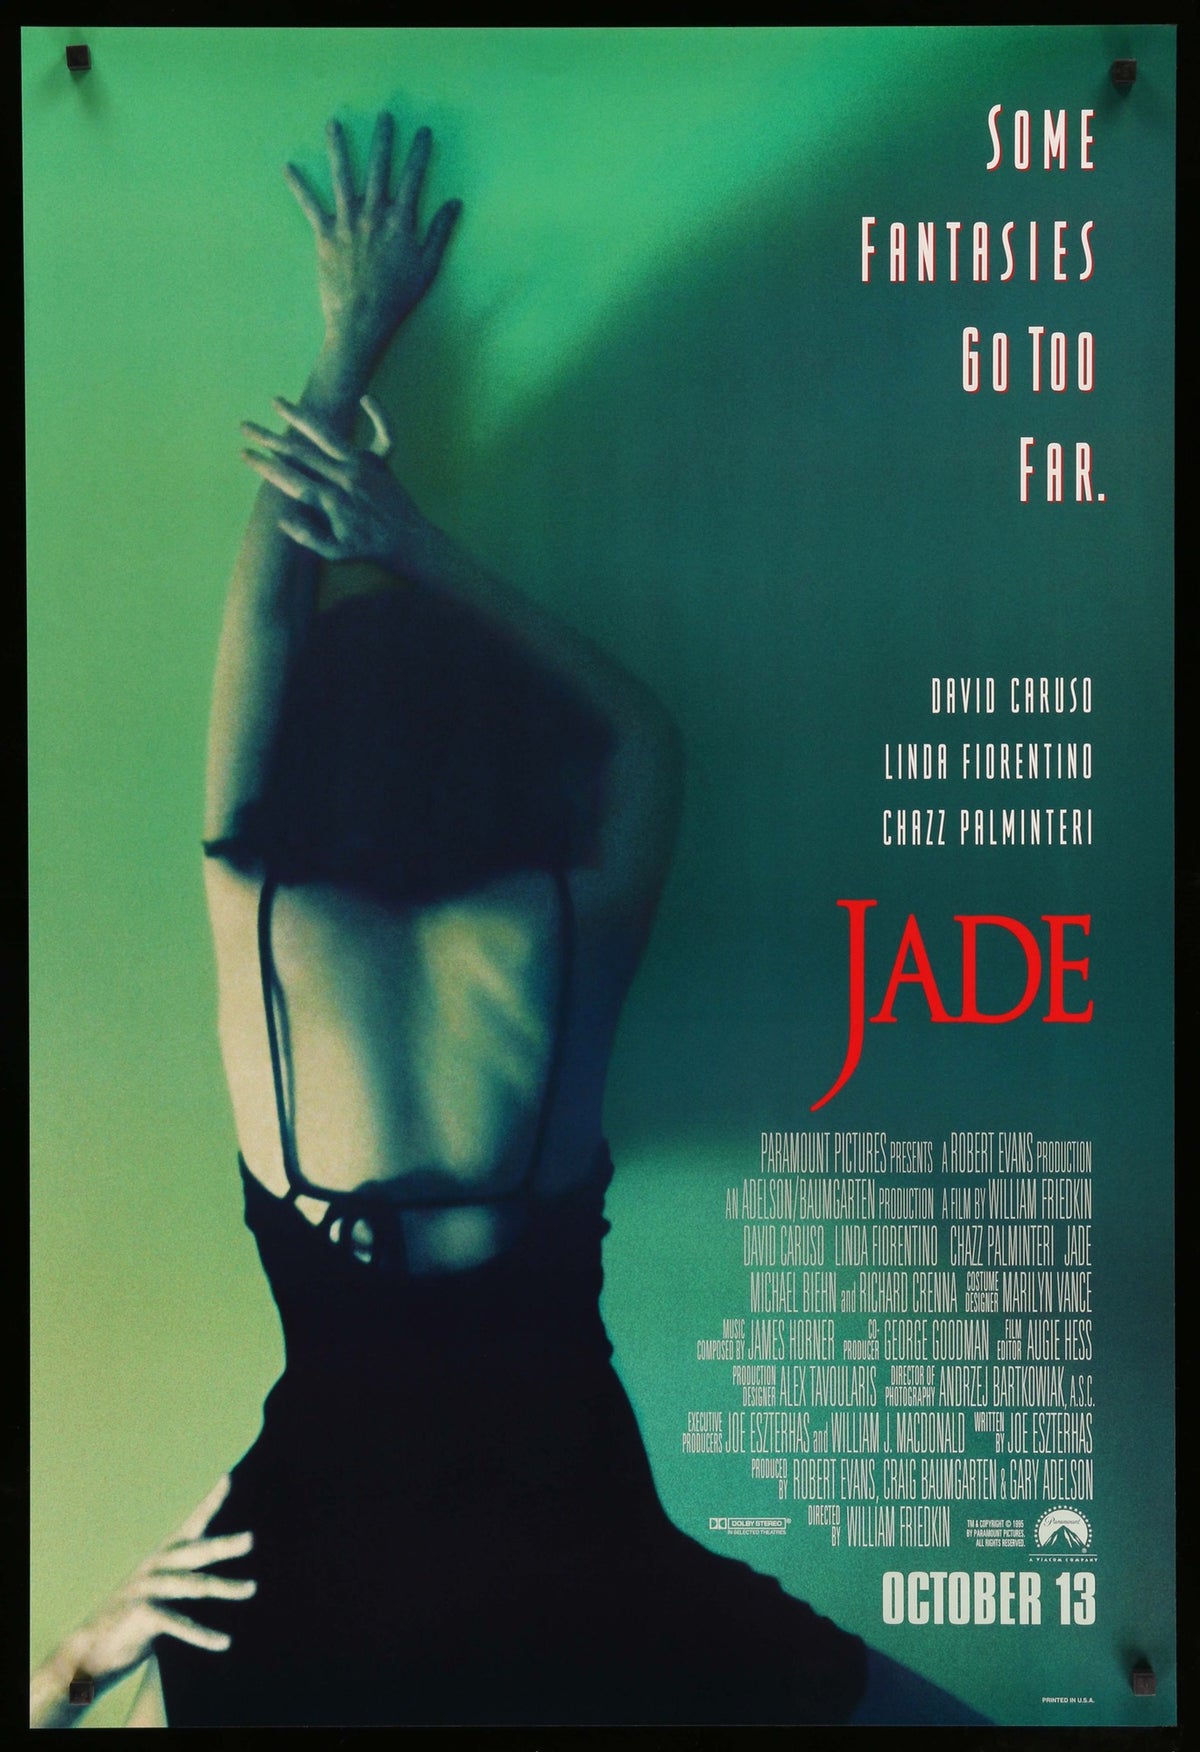 Jade (1995) original movie poster for sale at Original Film Art